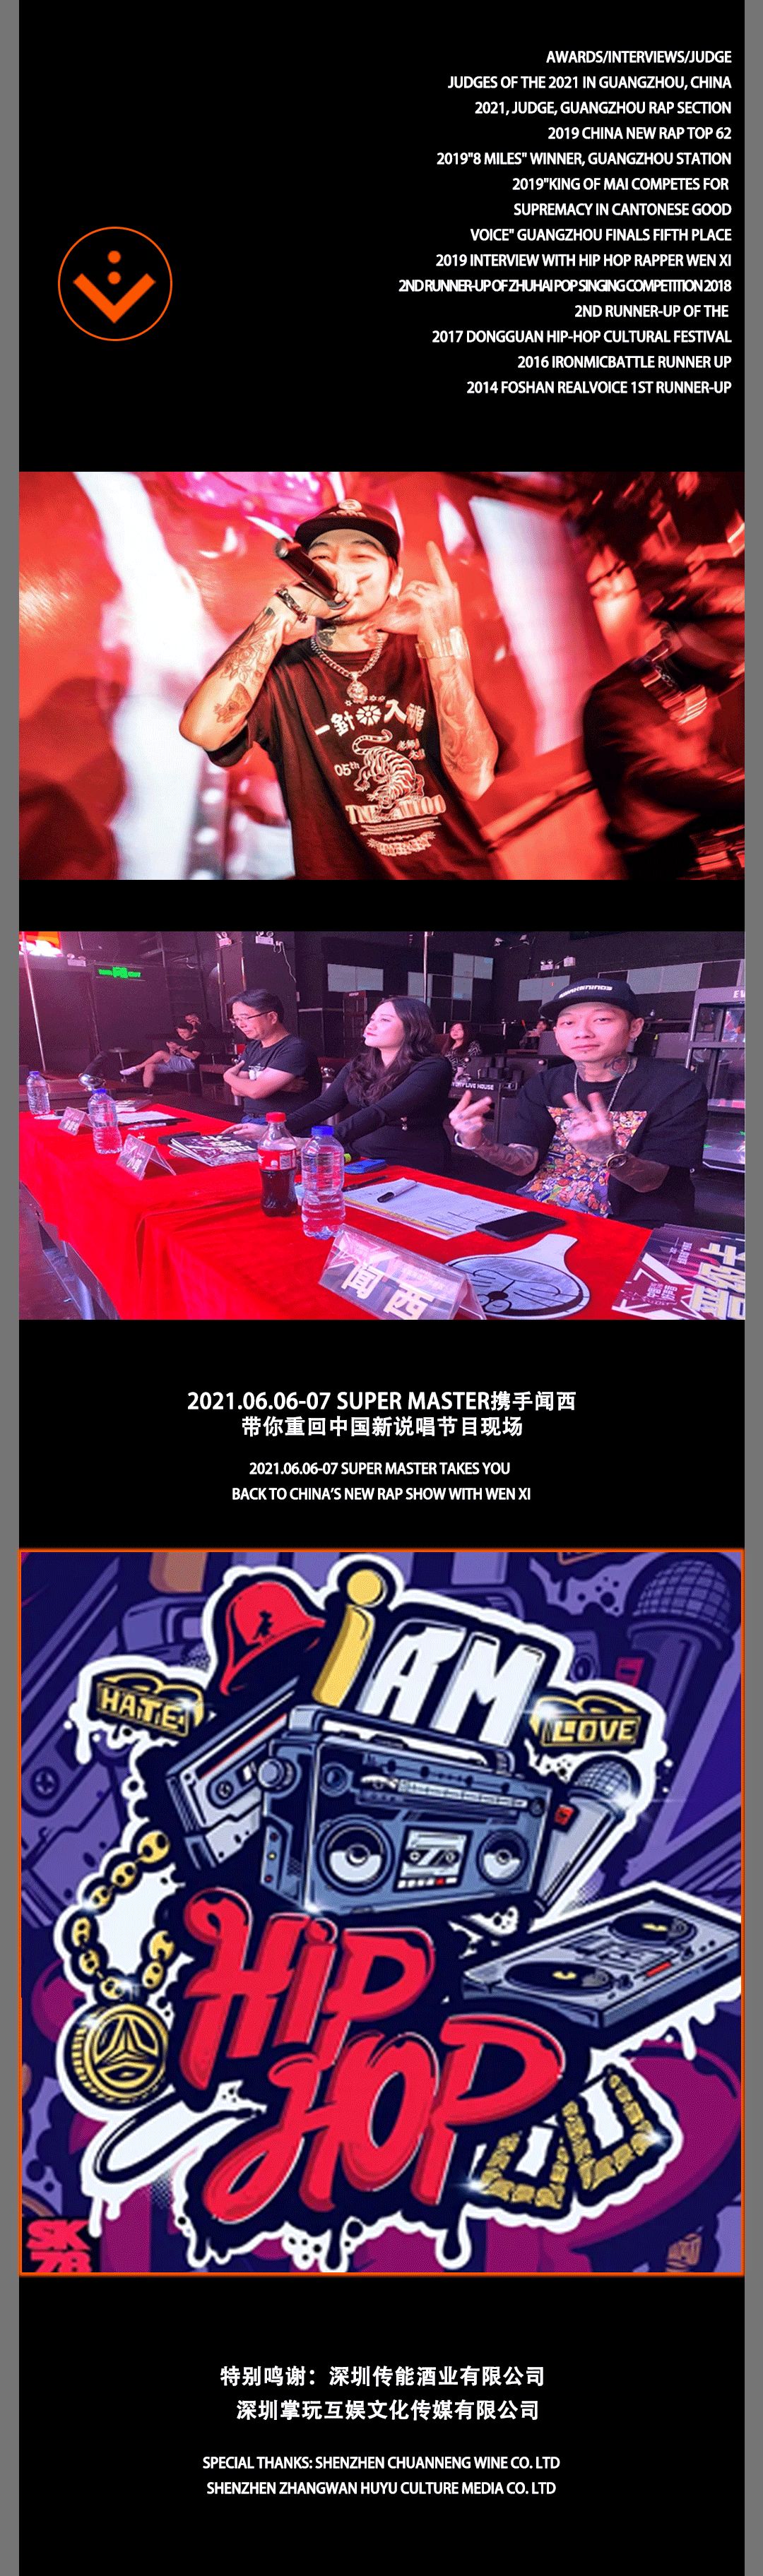 Super Master|2021.06.06-07，闻西带你回到中国新说唱的超热现场！-九江苏博马斯特酒吧/SuperMasterClub